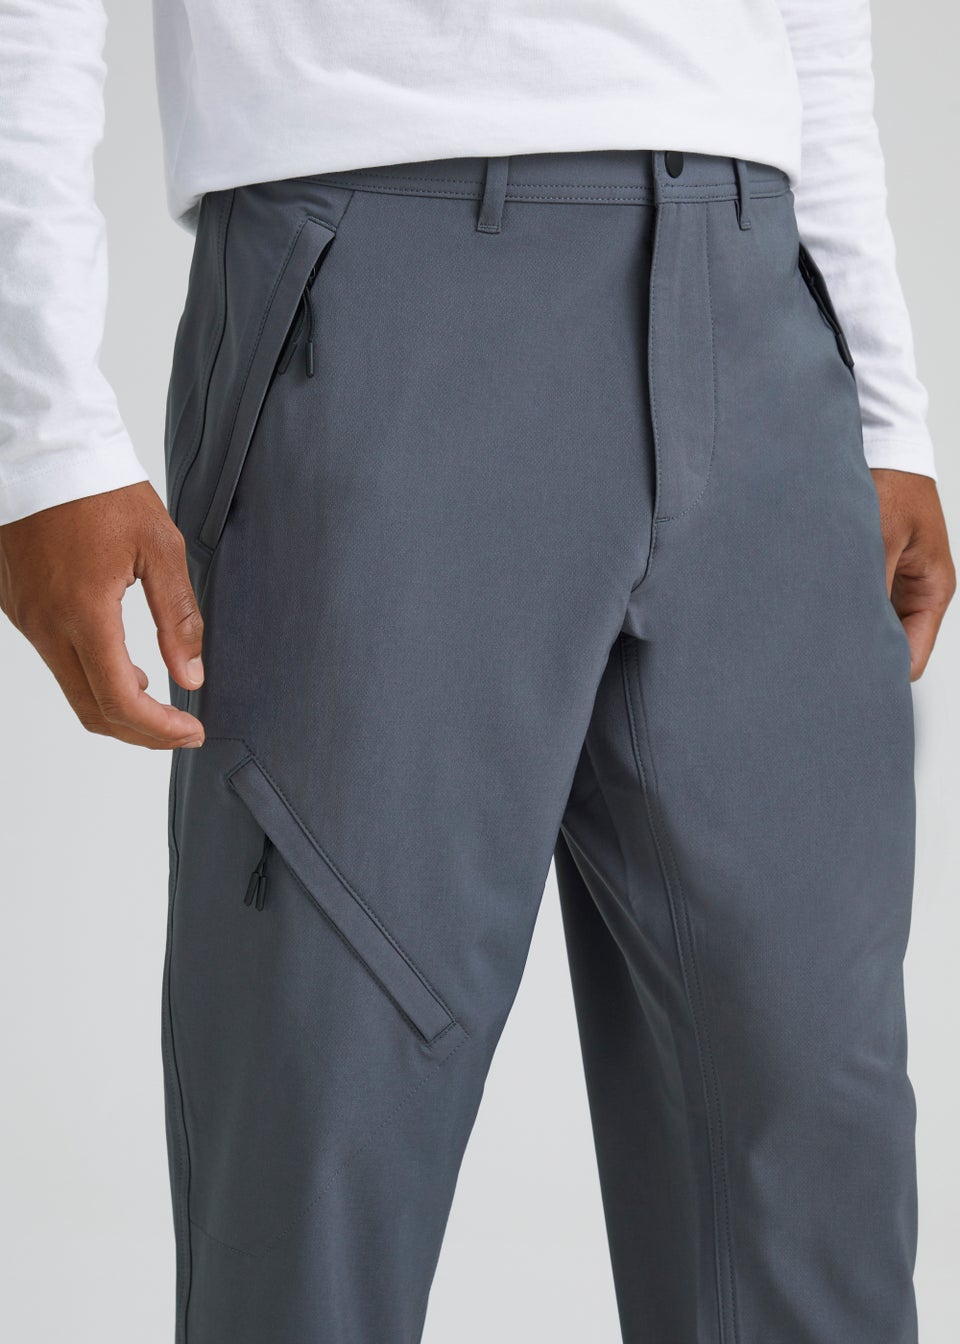 Grey Trek Trousers